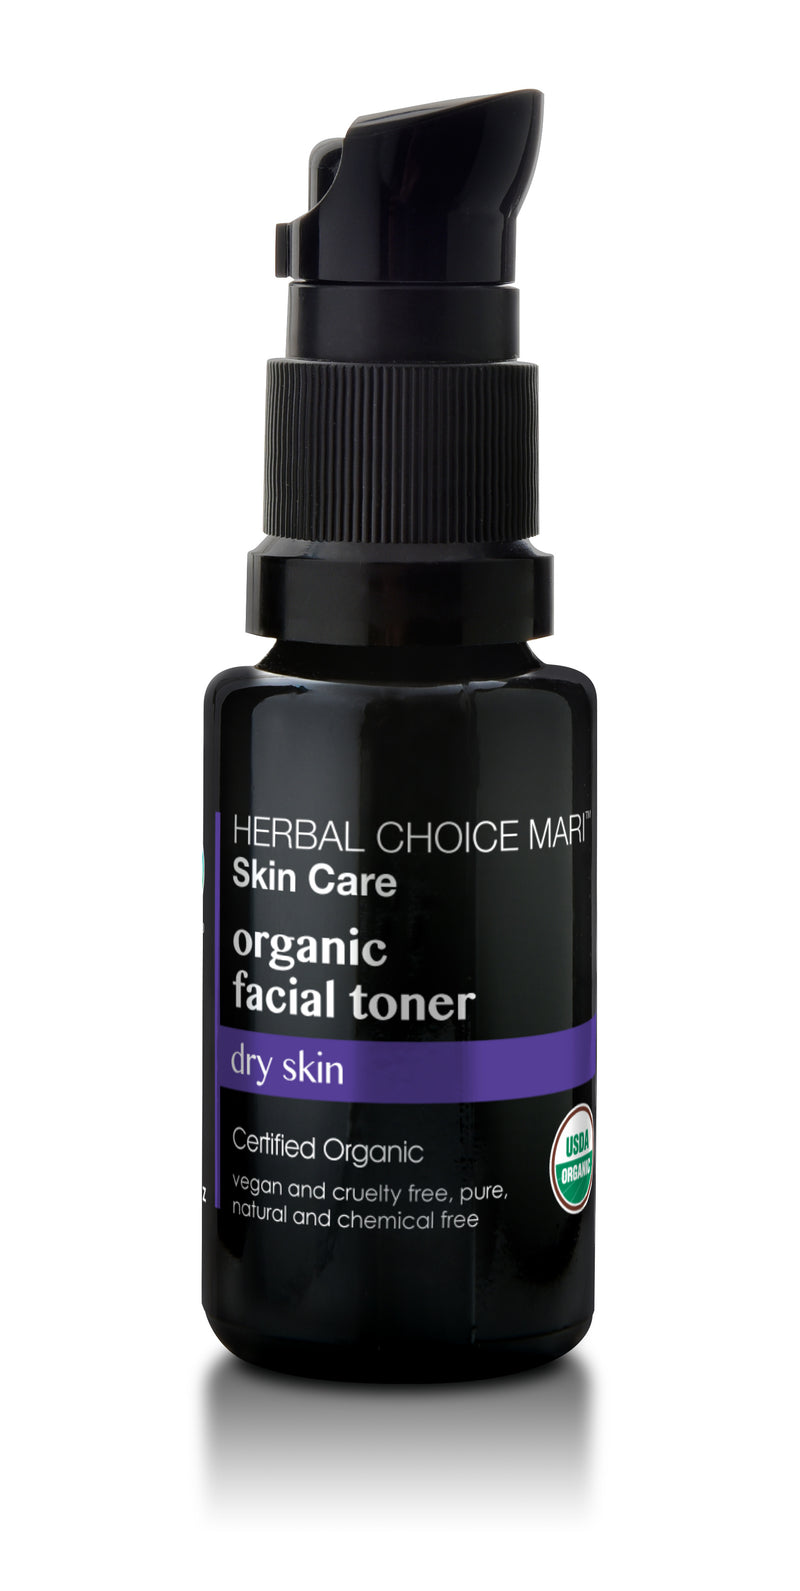 Herbal Choice Mari Organic Facial Toner, Dry Skin - Herbal Choice Mari Organic Facial Toner, Dry Skin - Herbal Choice Mari Organic Facial Toner, Dry Skin